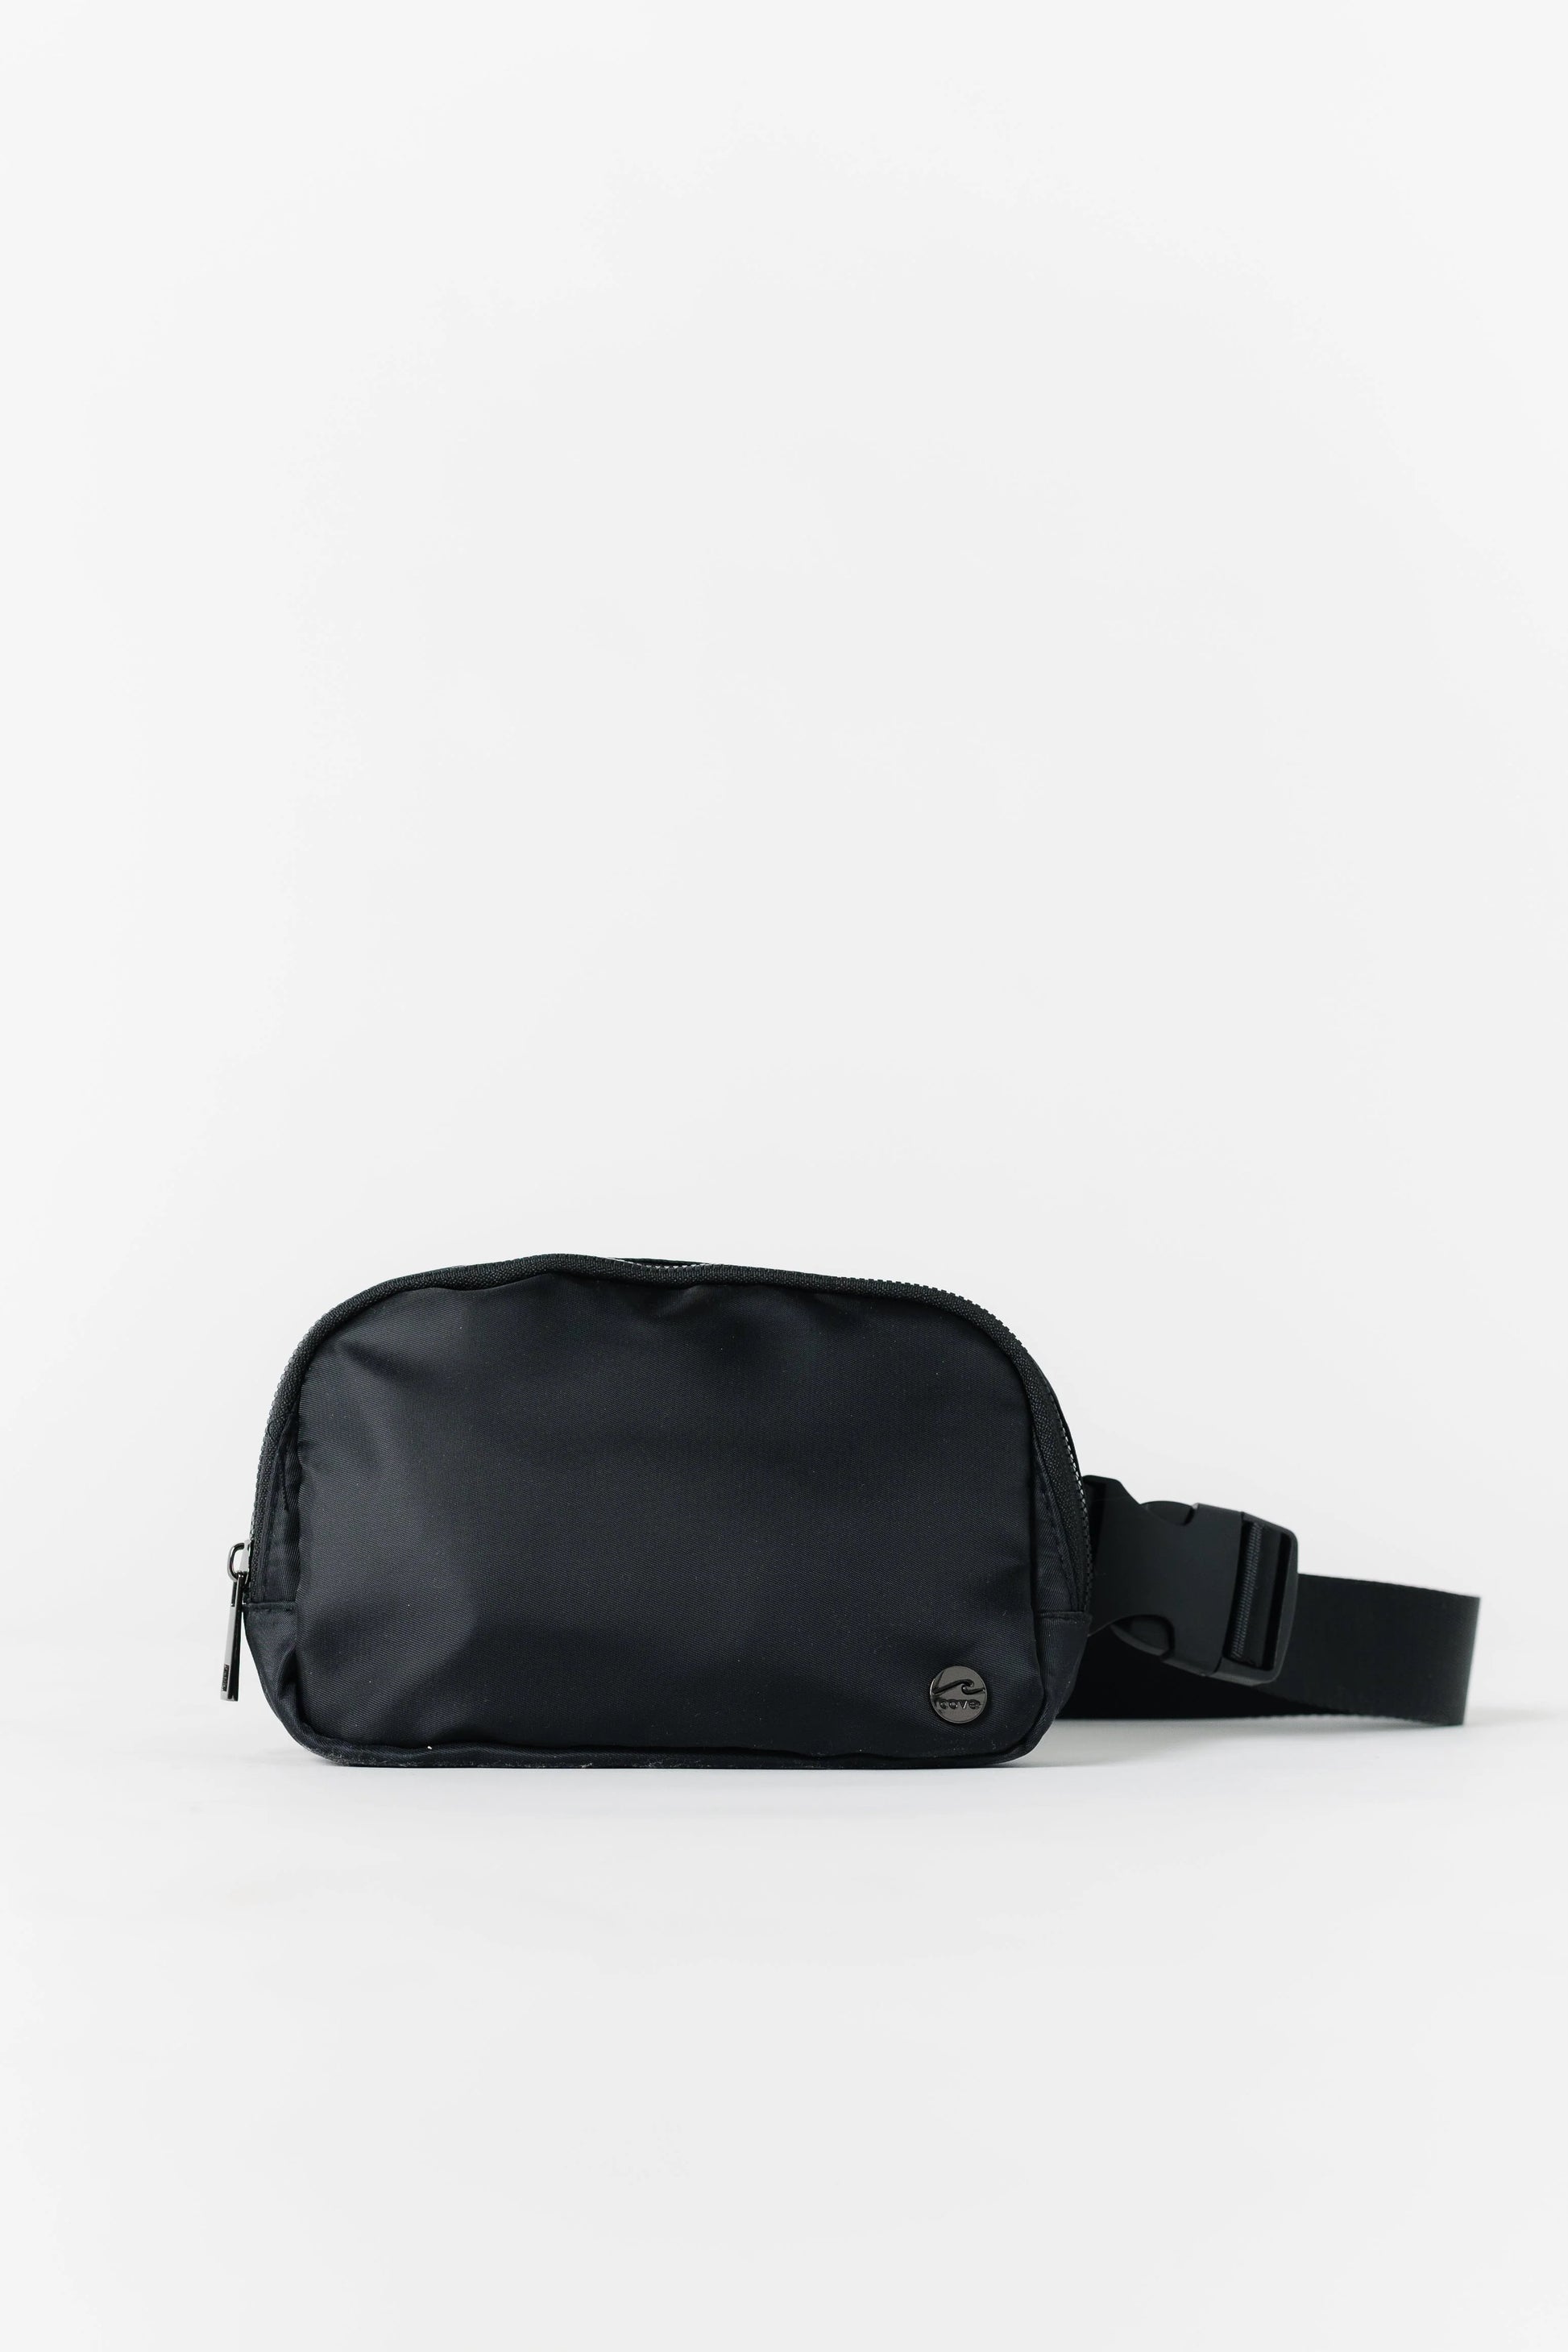 Cove Crossbody Bag - Fall Crossbody Bag Cove Accessories Black OS 